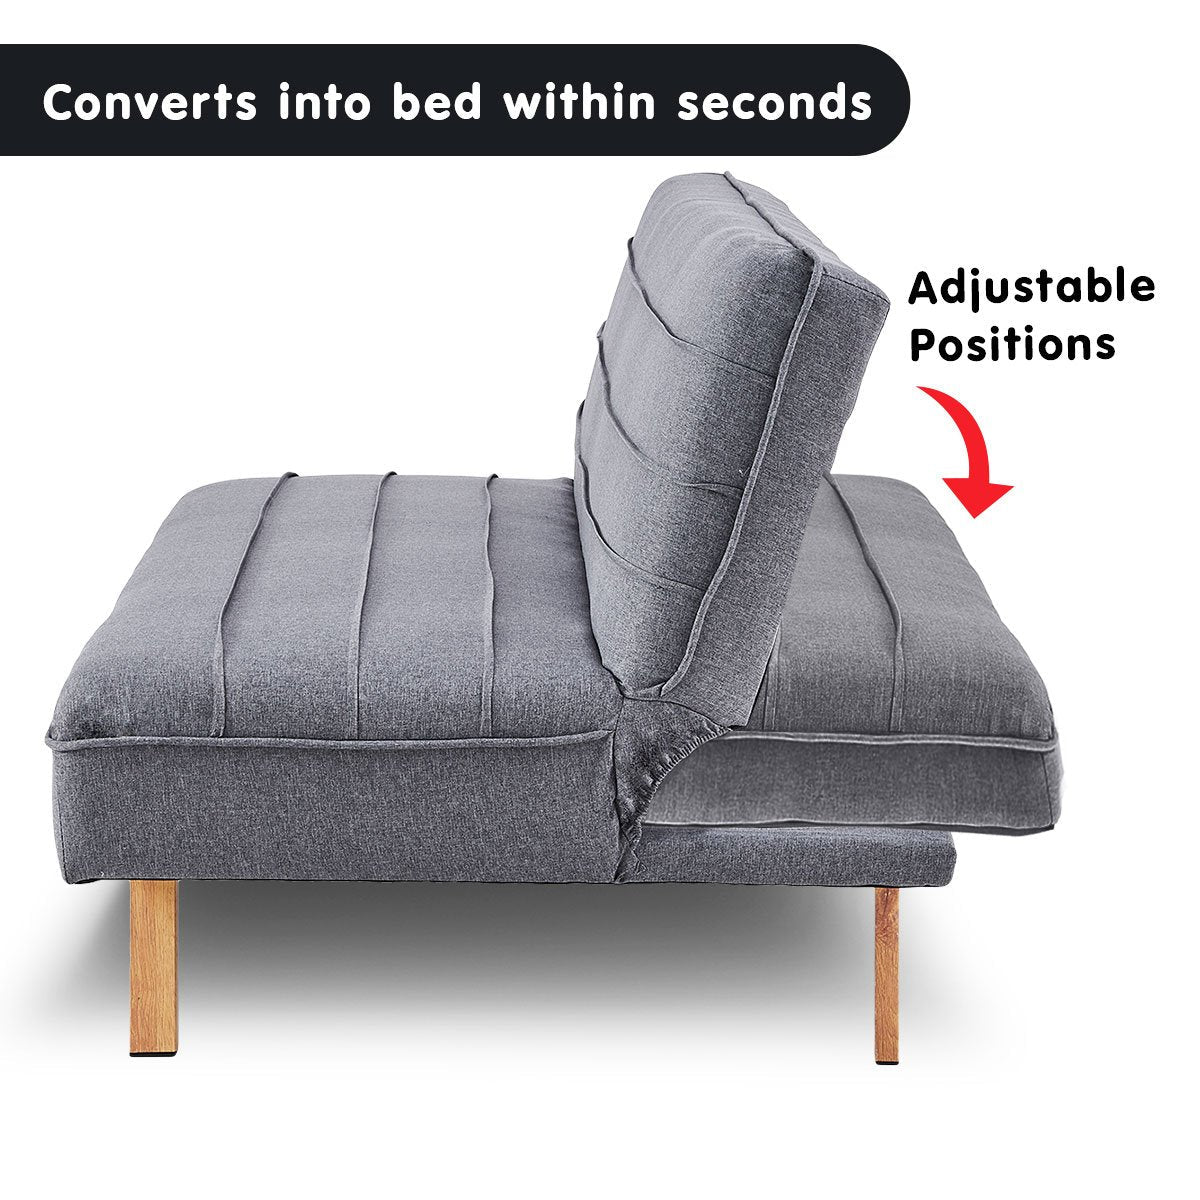 indoor furniture 3 Seater Modular Linen Fabric Sofa Bed Couch - Dark Grey